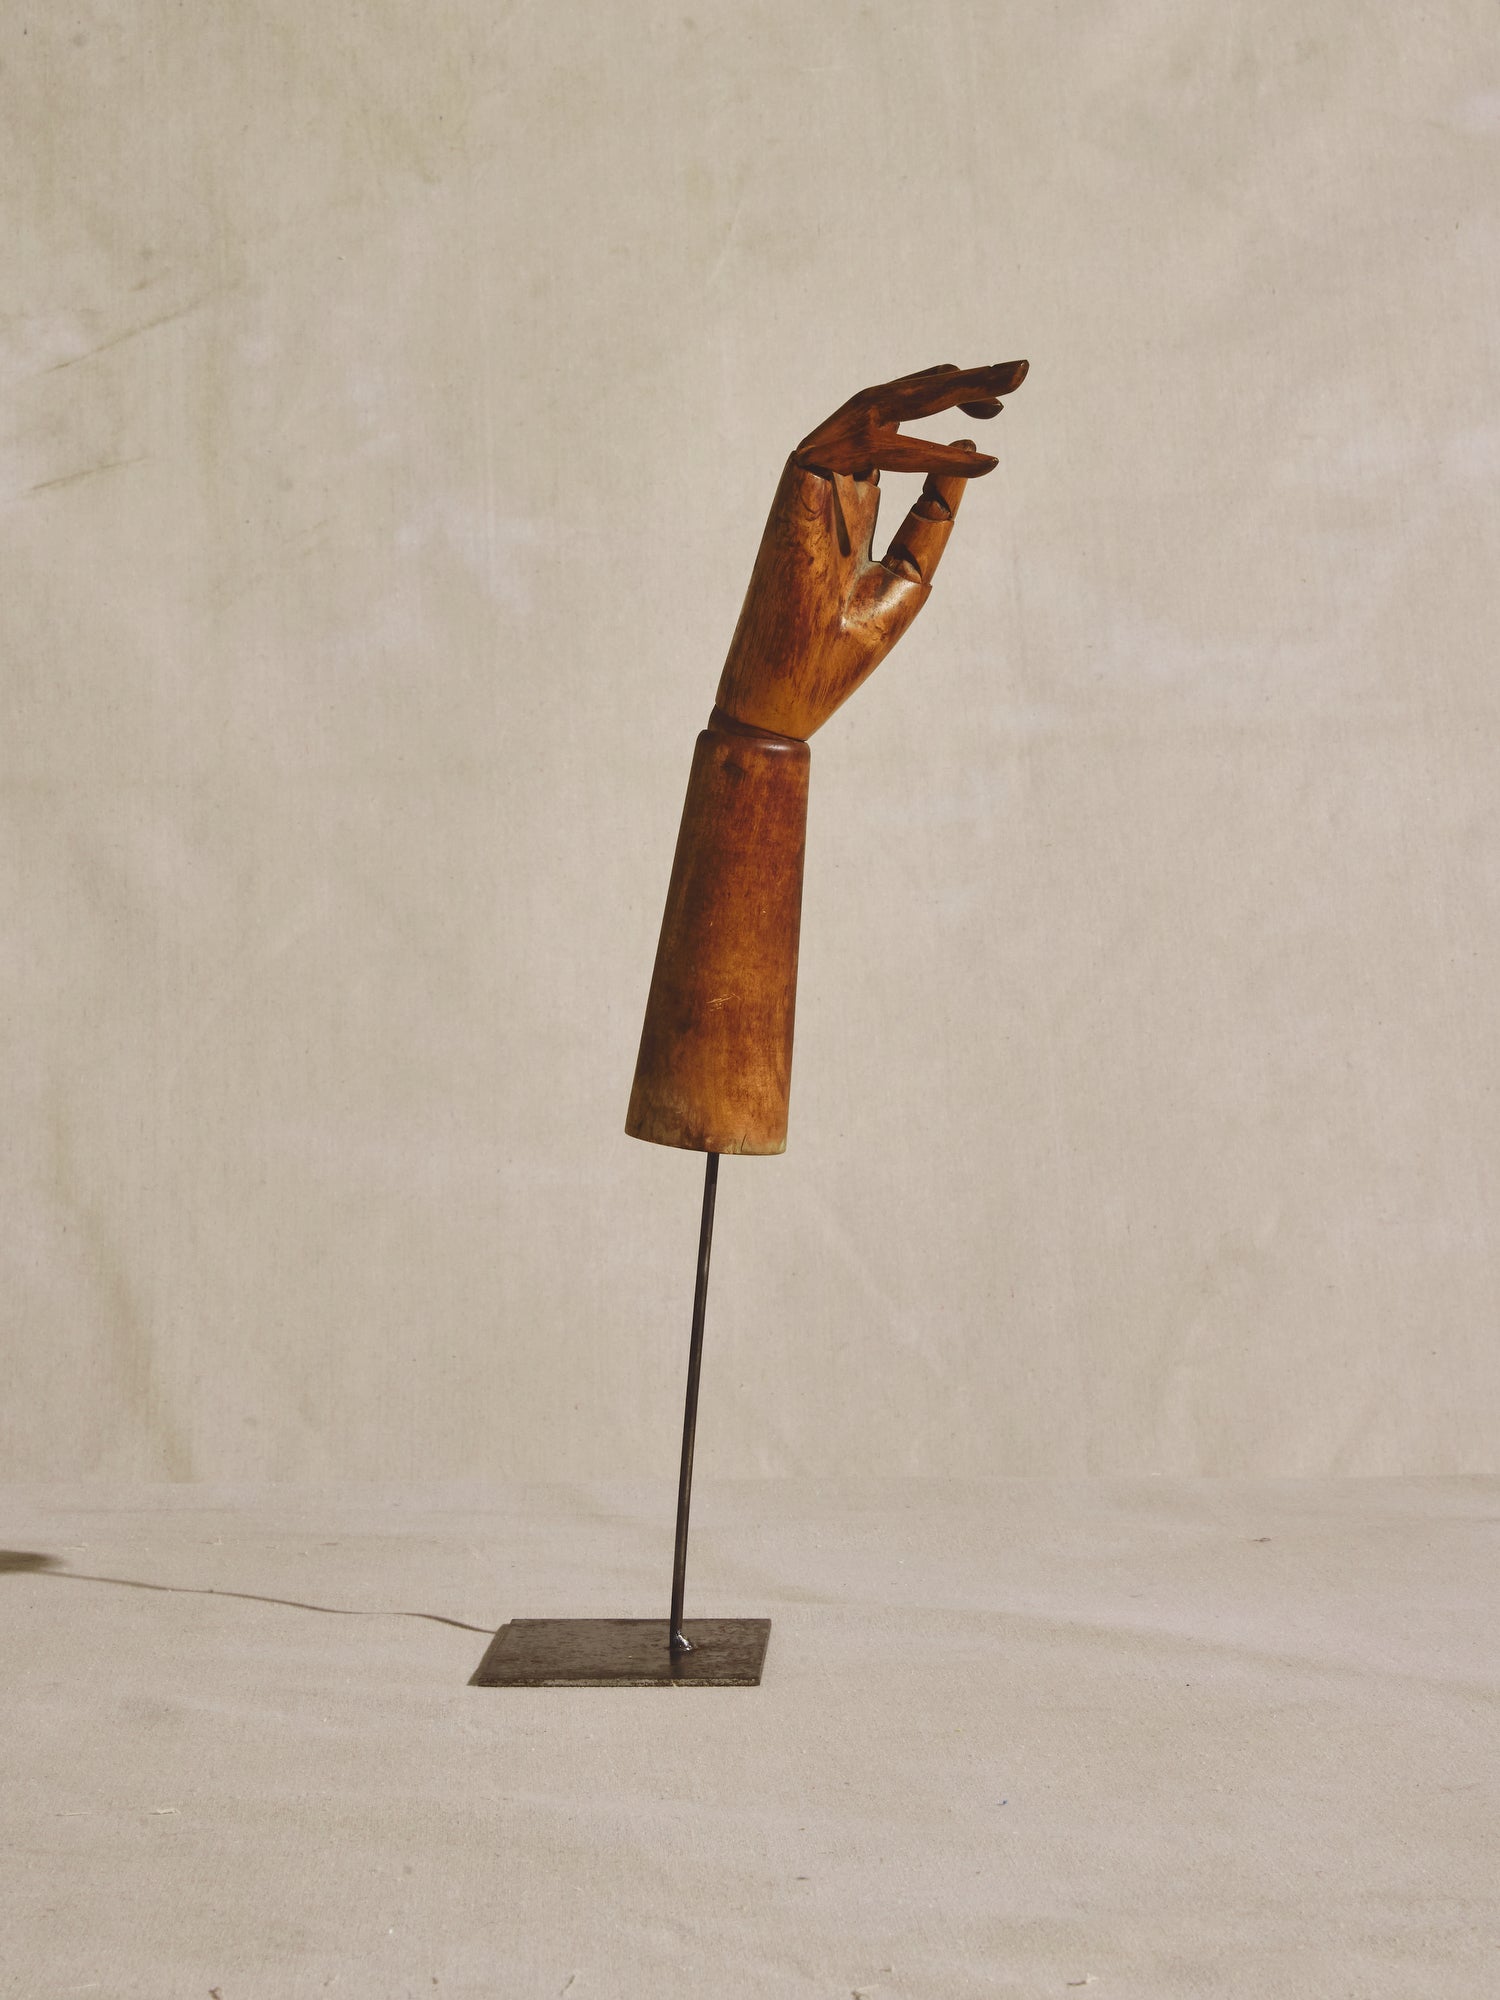 Articulated mannequin hand, on metal pedestal.